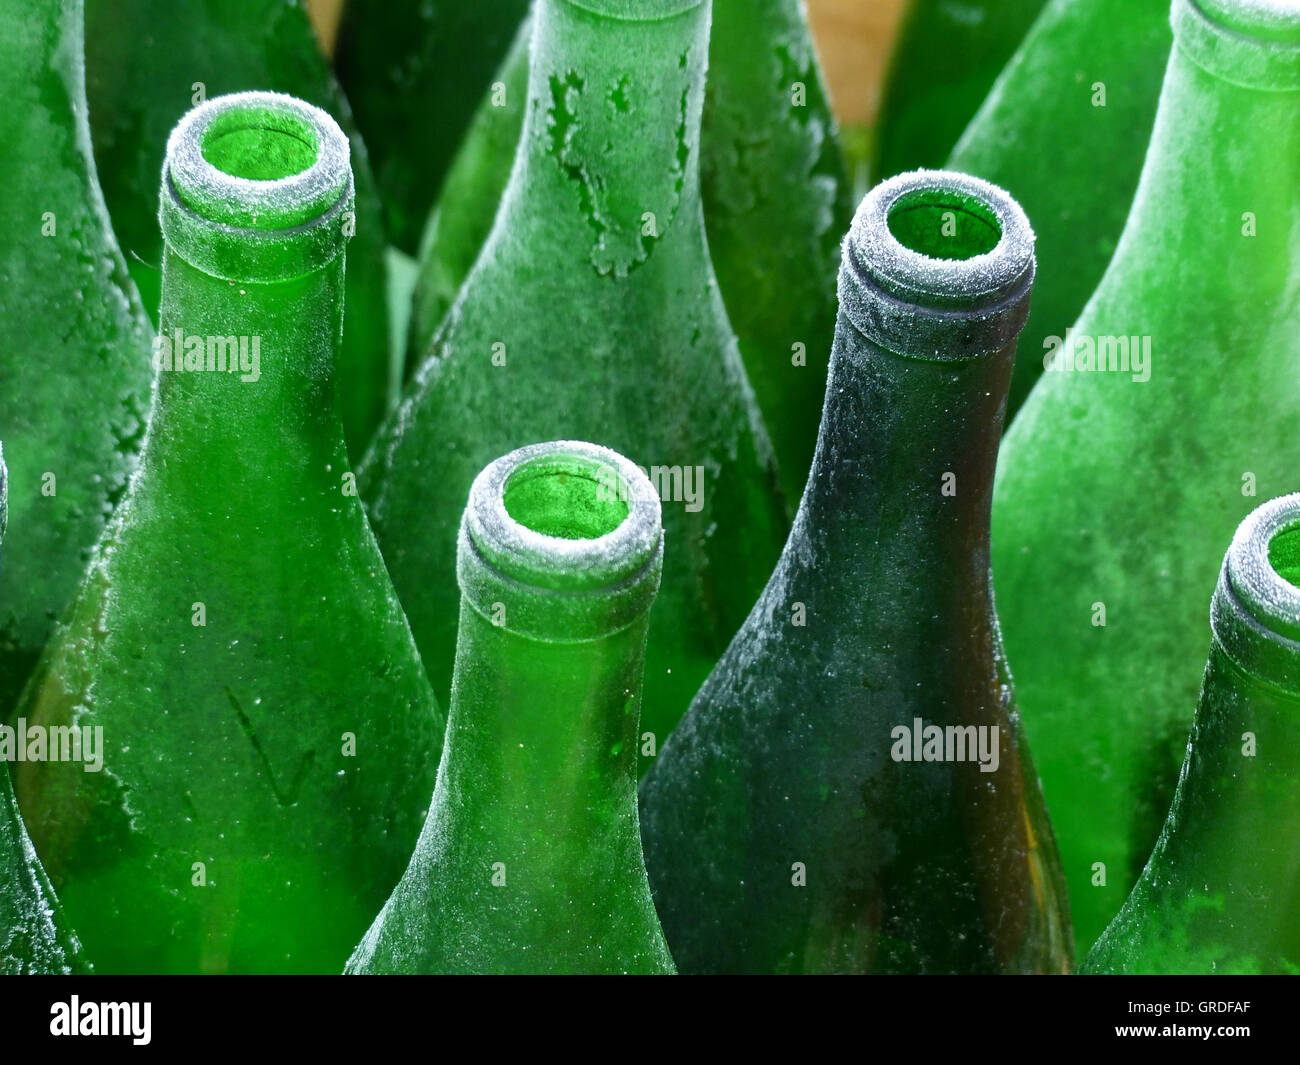 Vuoto verde bottiglie di vino, ghiacciato Foto Stock